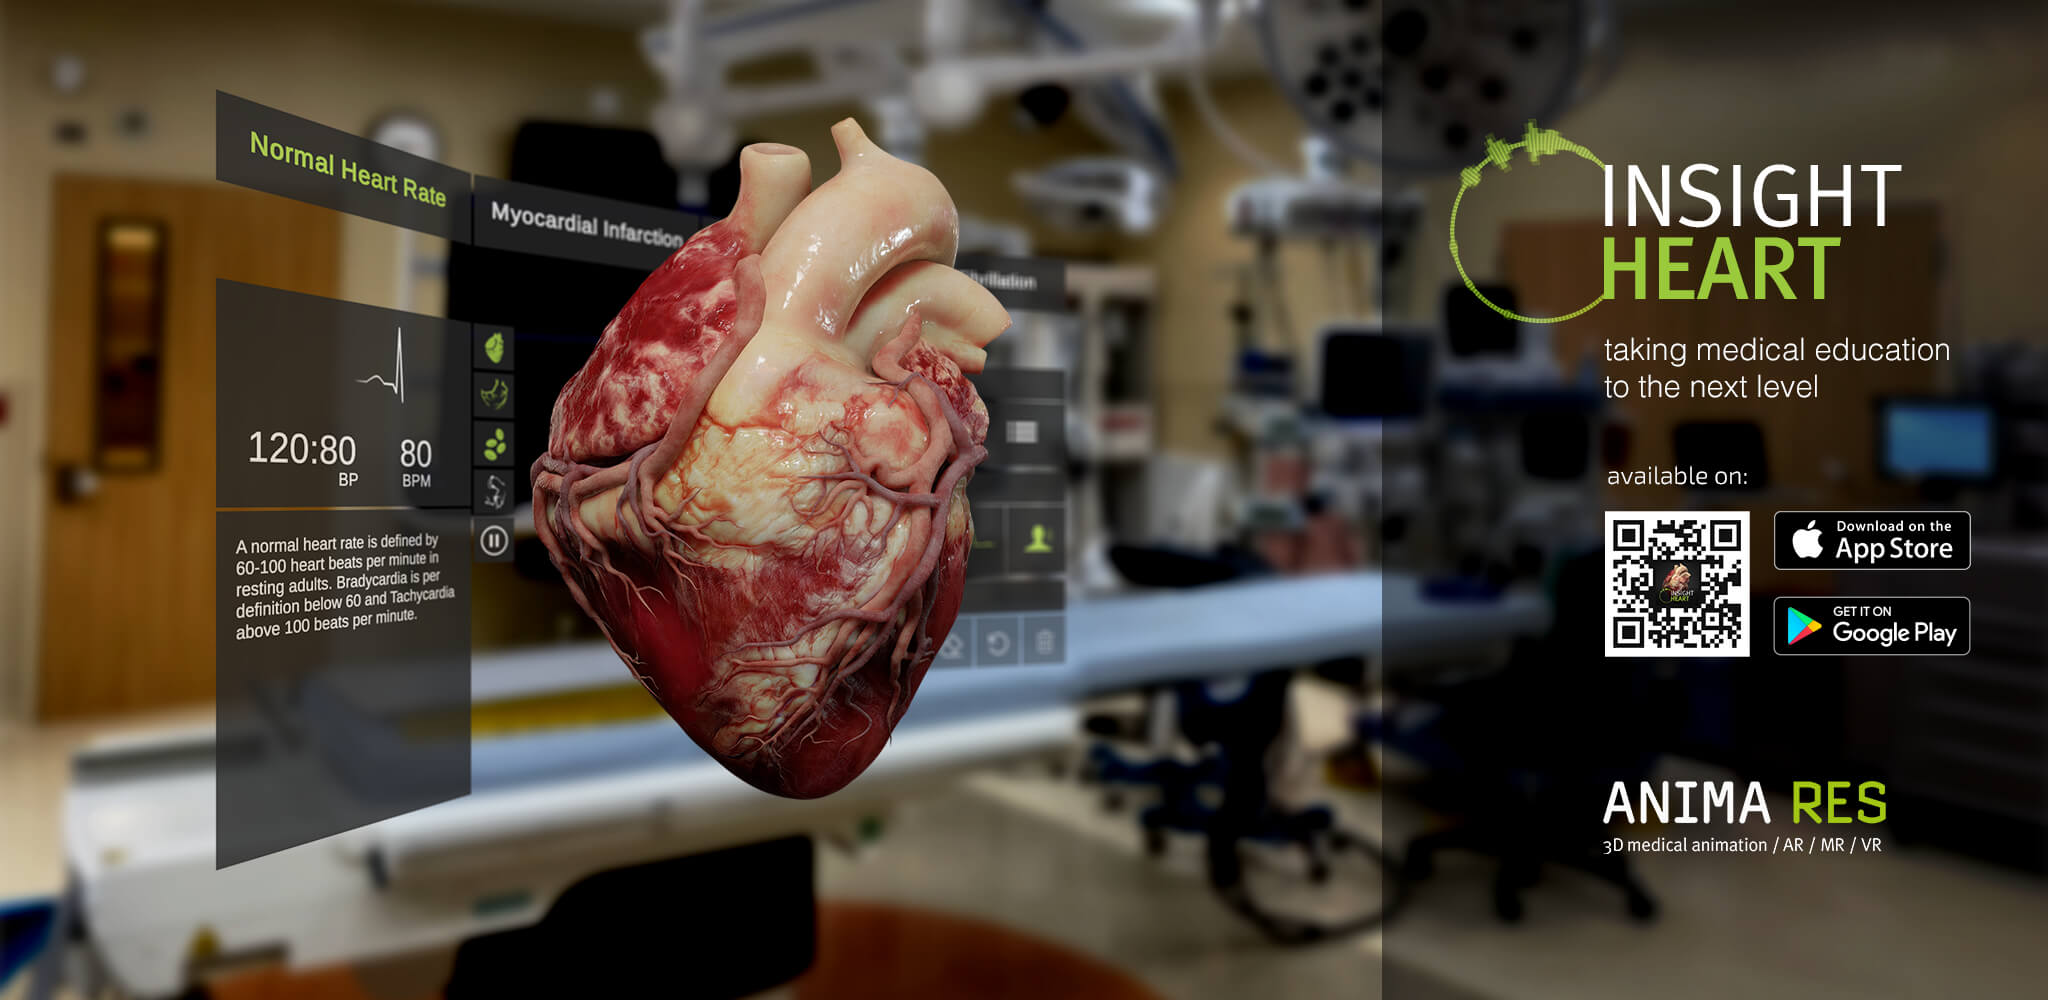 ANIMA RES – 3D medical animation / AR / MR / VR